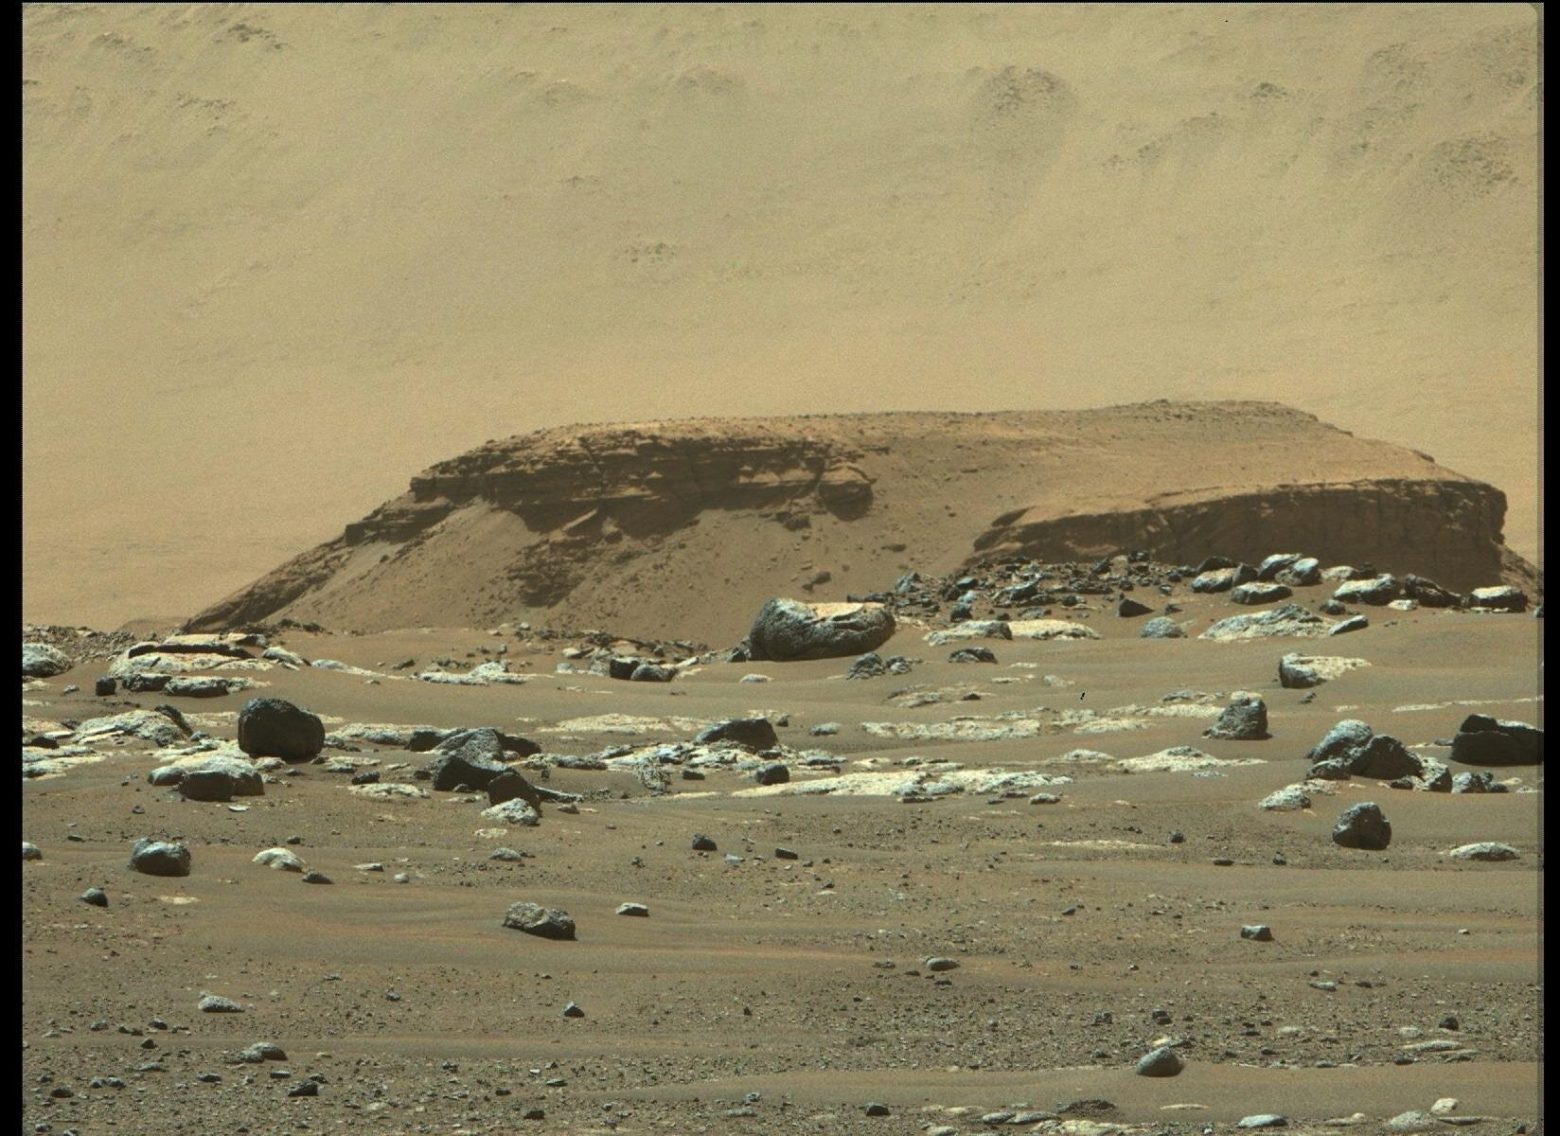 NASA - Το Perseverance κινείται μέσα σε μια μεγάλη αρχαία λίμνη του Άρη